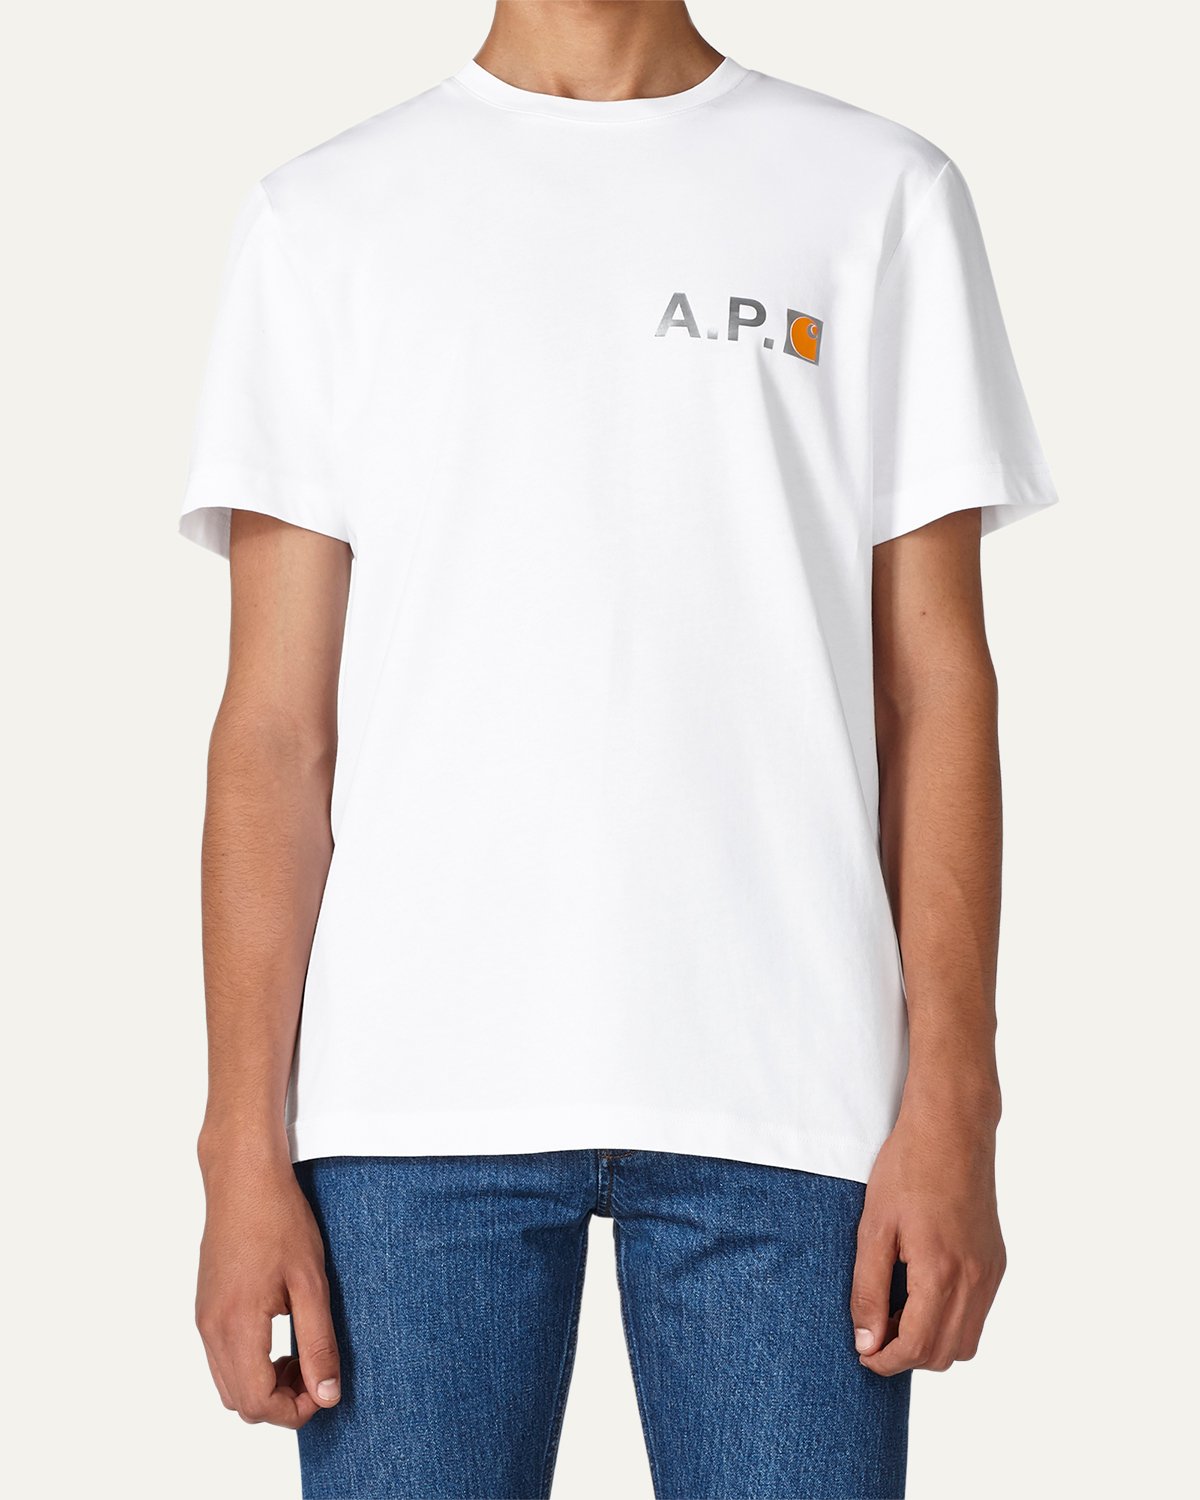 A.P.C. x Carhartt WIP - Fire T-Shirt White - Tops - White - Image 2